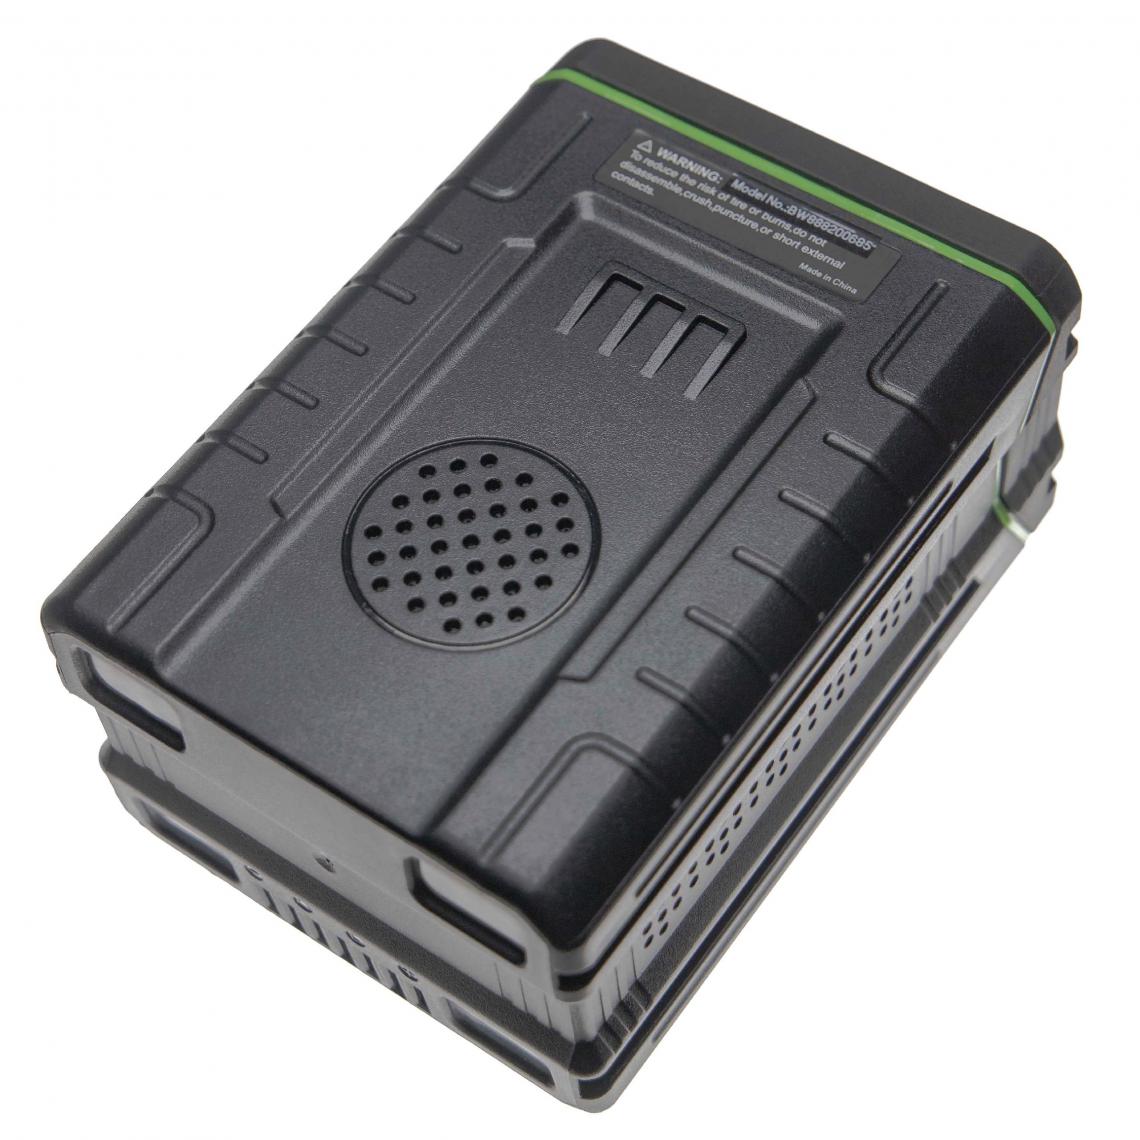 Vhbw - vhbw Batterie compatible avec Stiga Model-1, Multiclip 47 AE, Multiclip 47 S AE, SAB 80 AE, SBC 80 D AE outil électrique (2000mAh Li-ion 80V) - Accessoires vissage, perçage